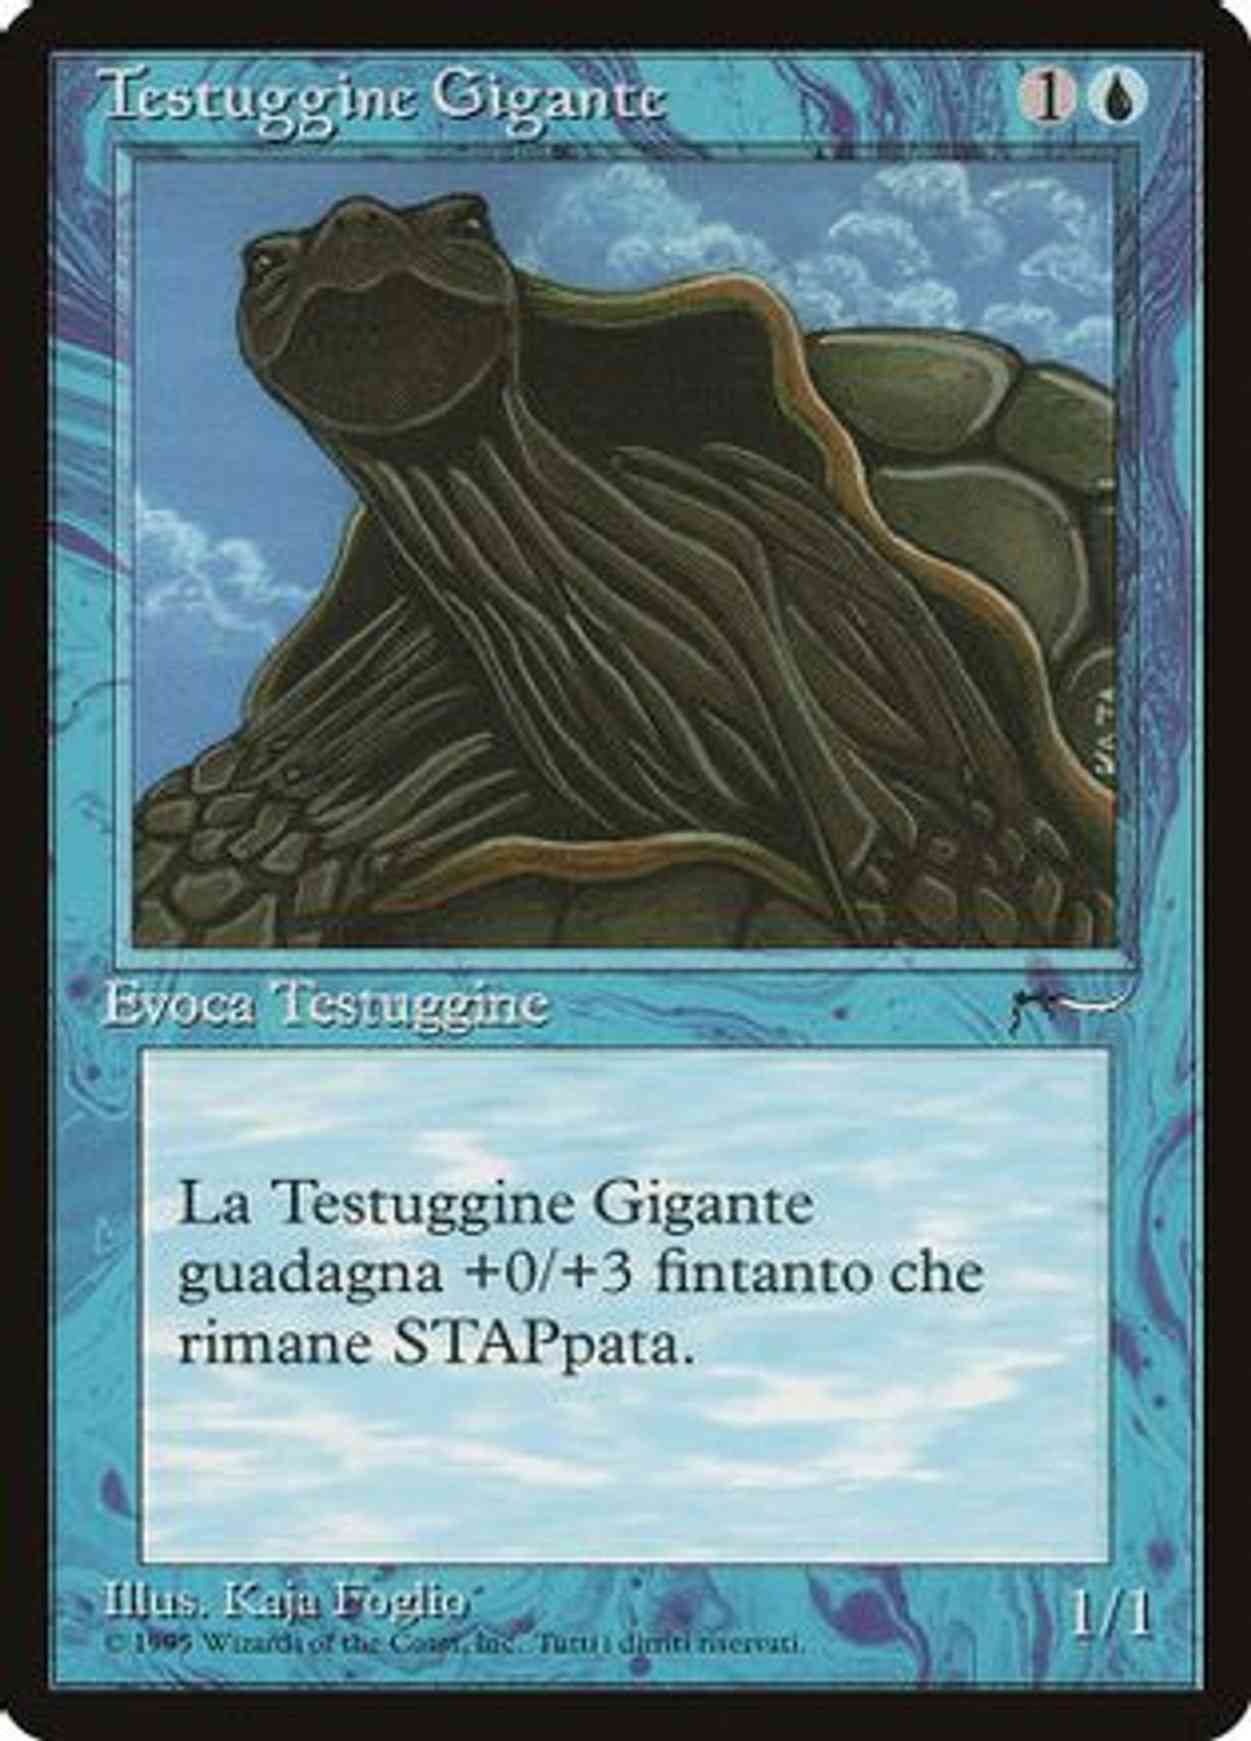 Giant Tortoise (Italian) - "Testuggine Gigante" magic card front